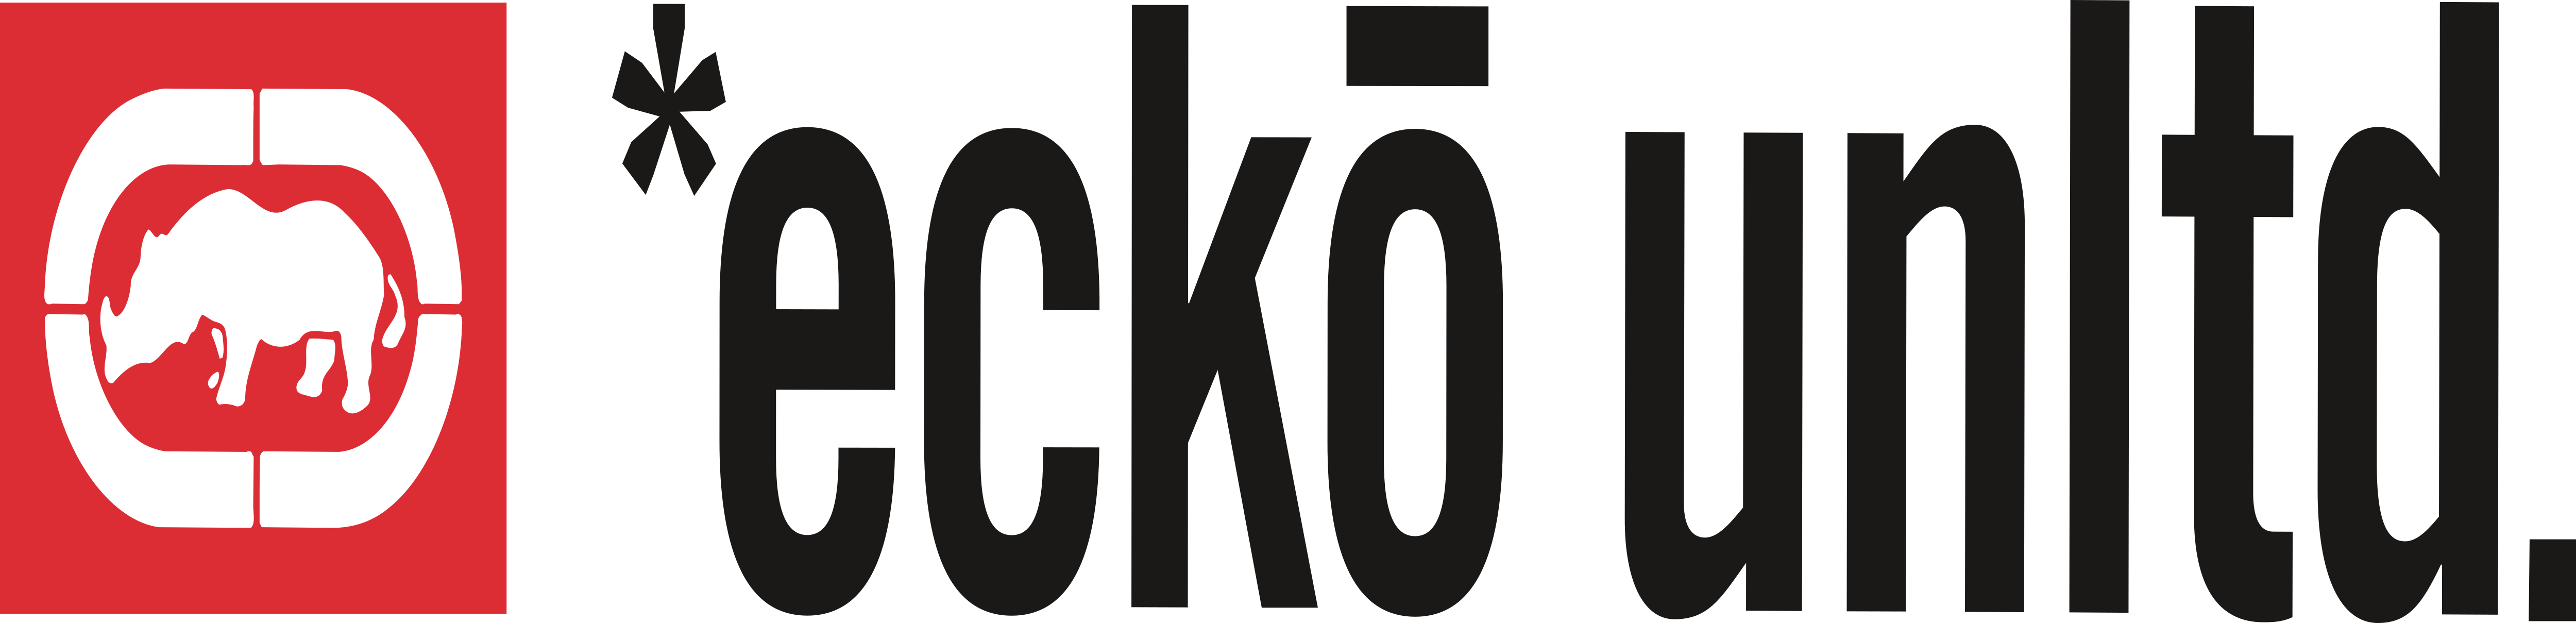 Eckō Unltd Logos Download